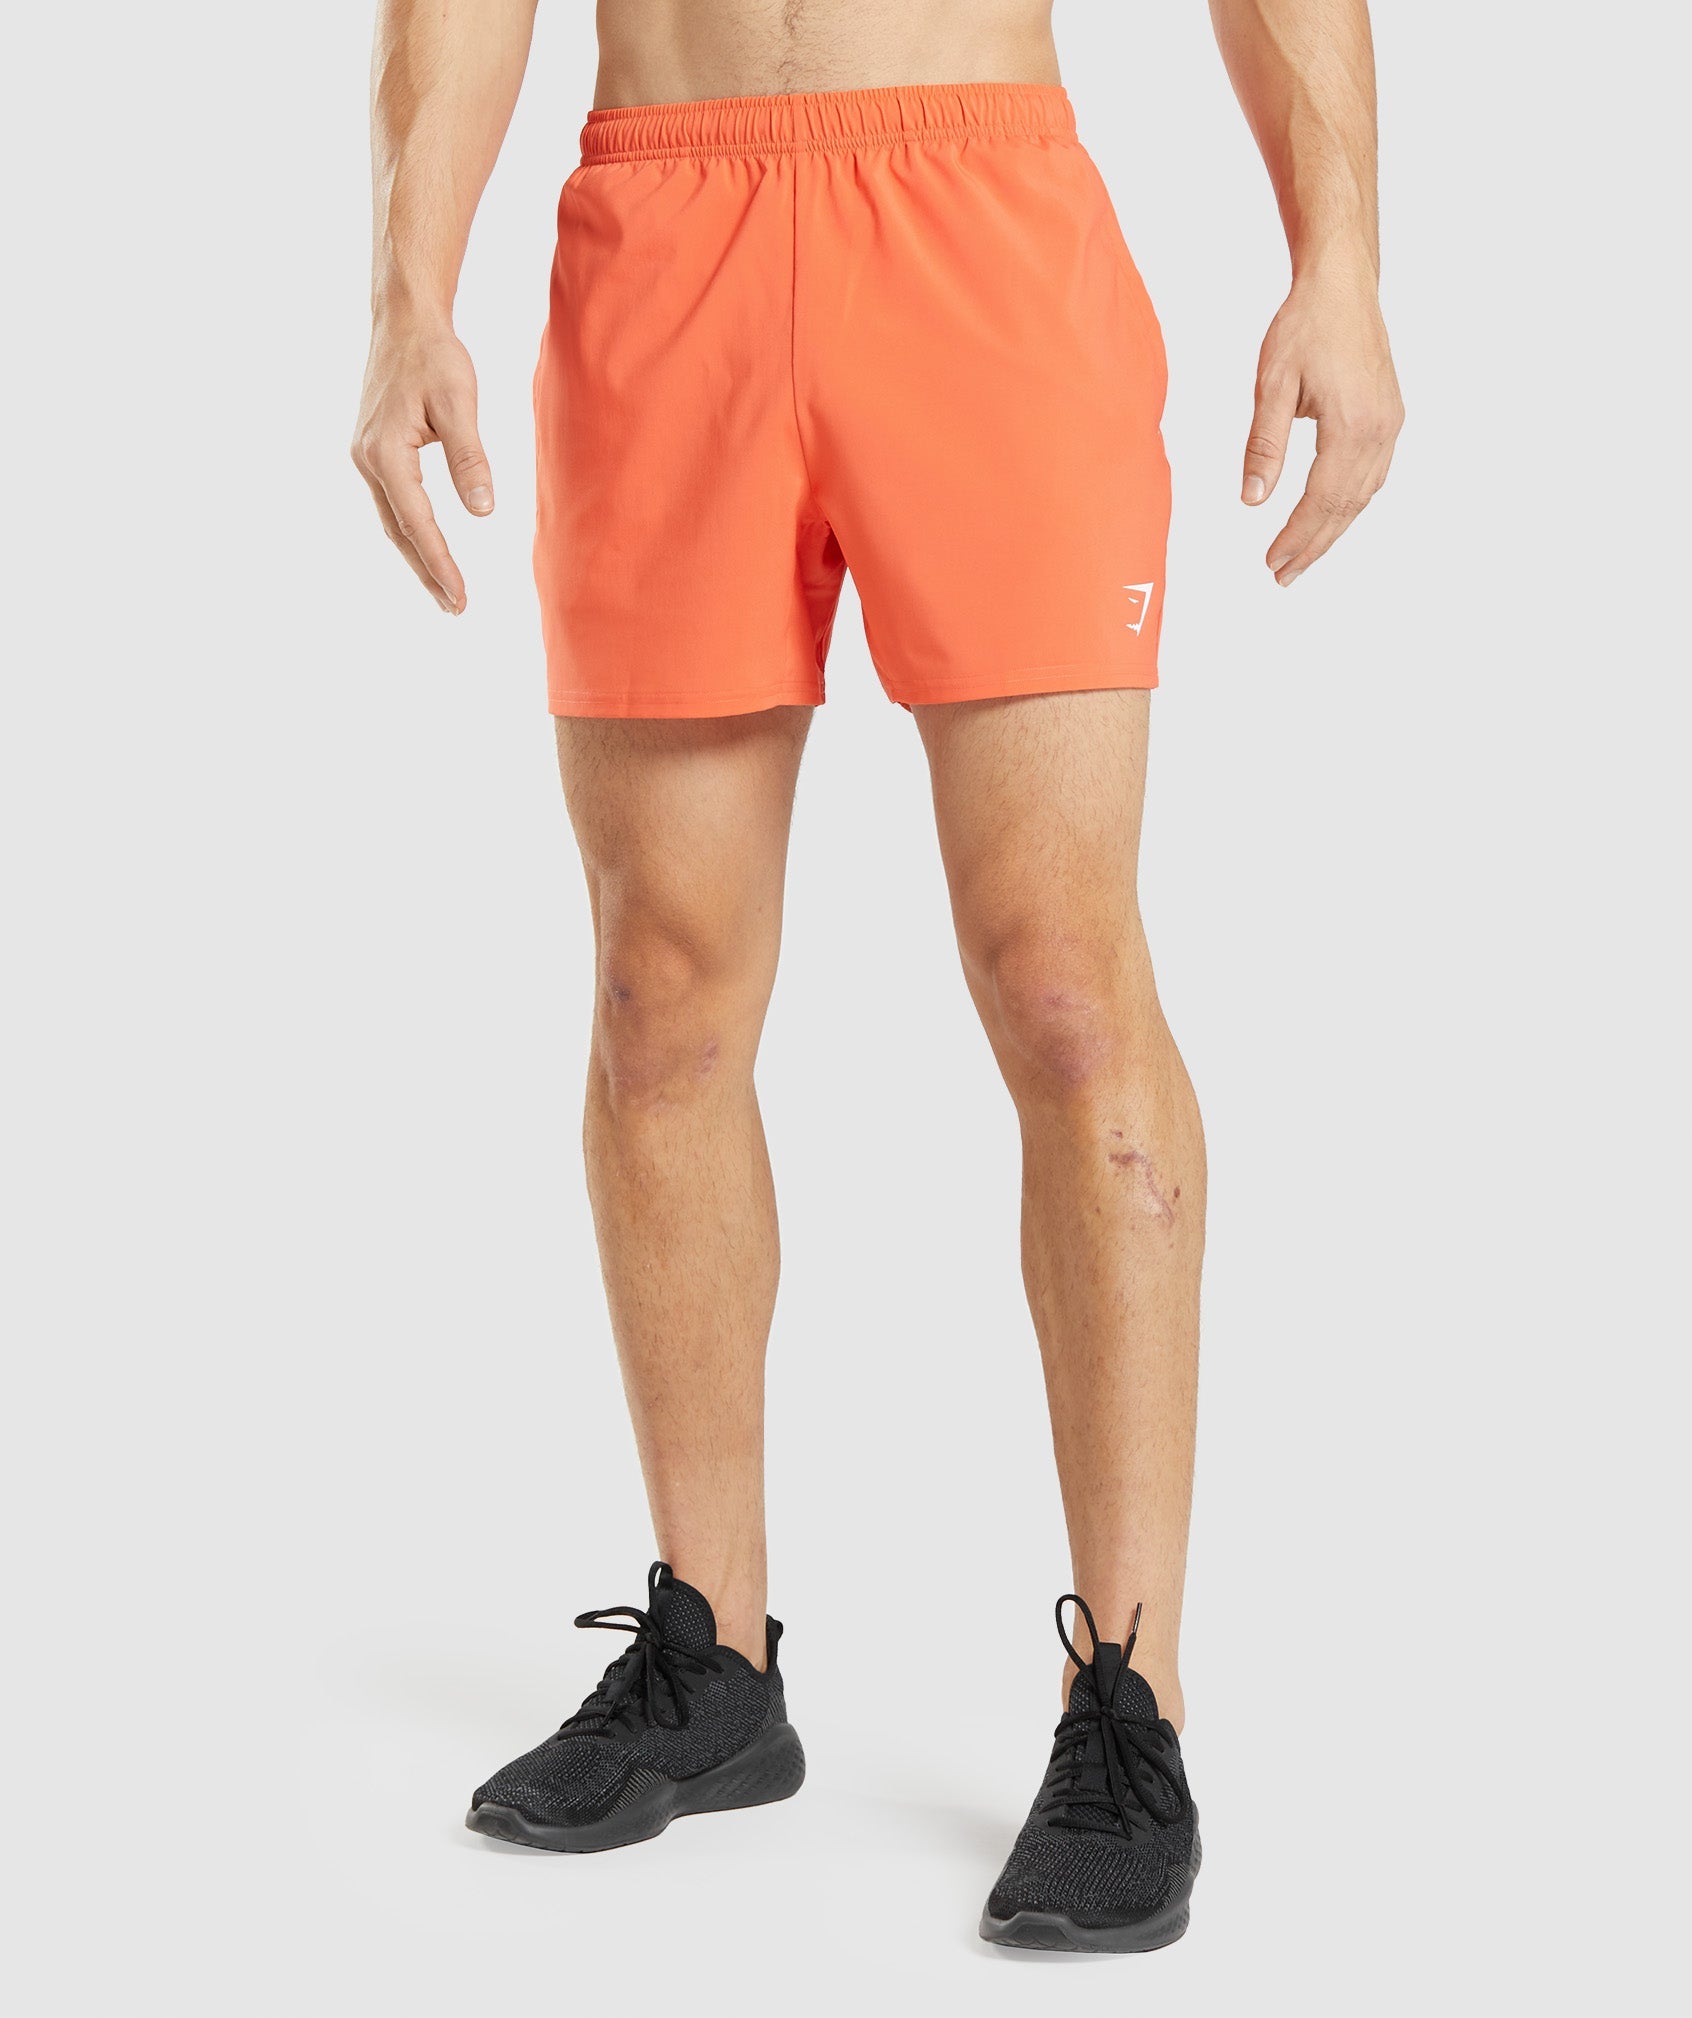 Gymshark Speed Evolve 5 2 in 1 Athletic Shorts Orange Mens Size Mediu -  beyond exchange